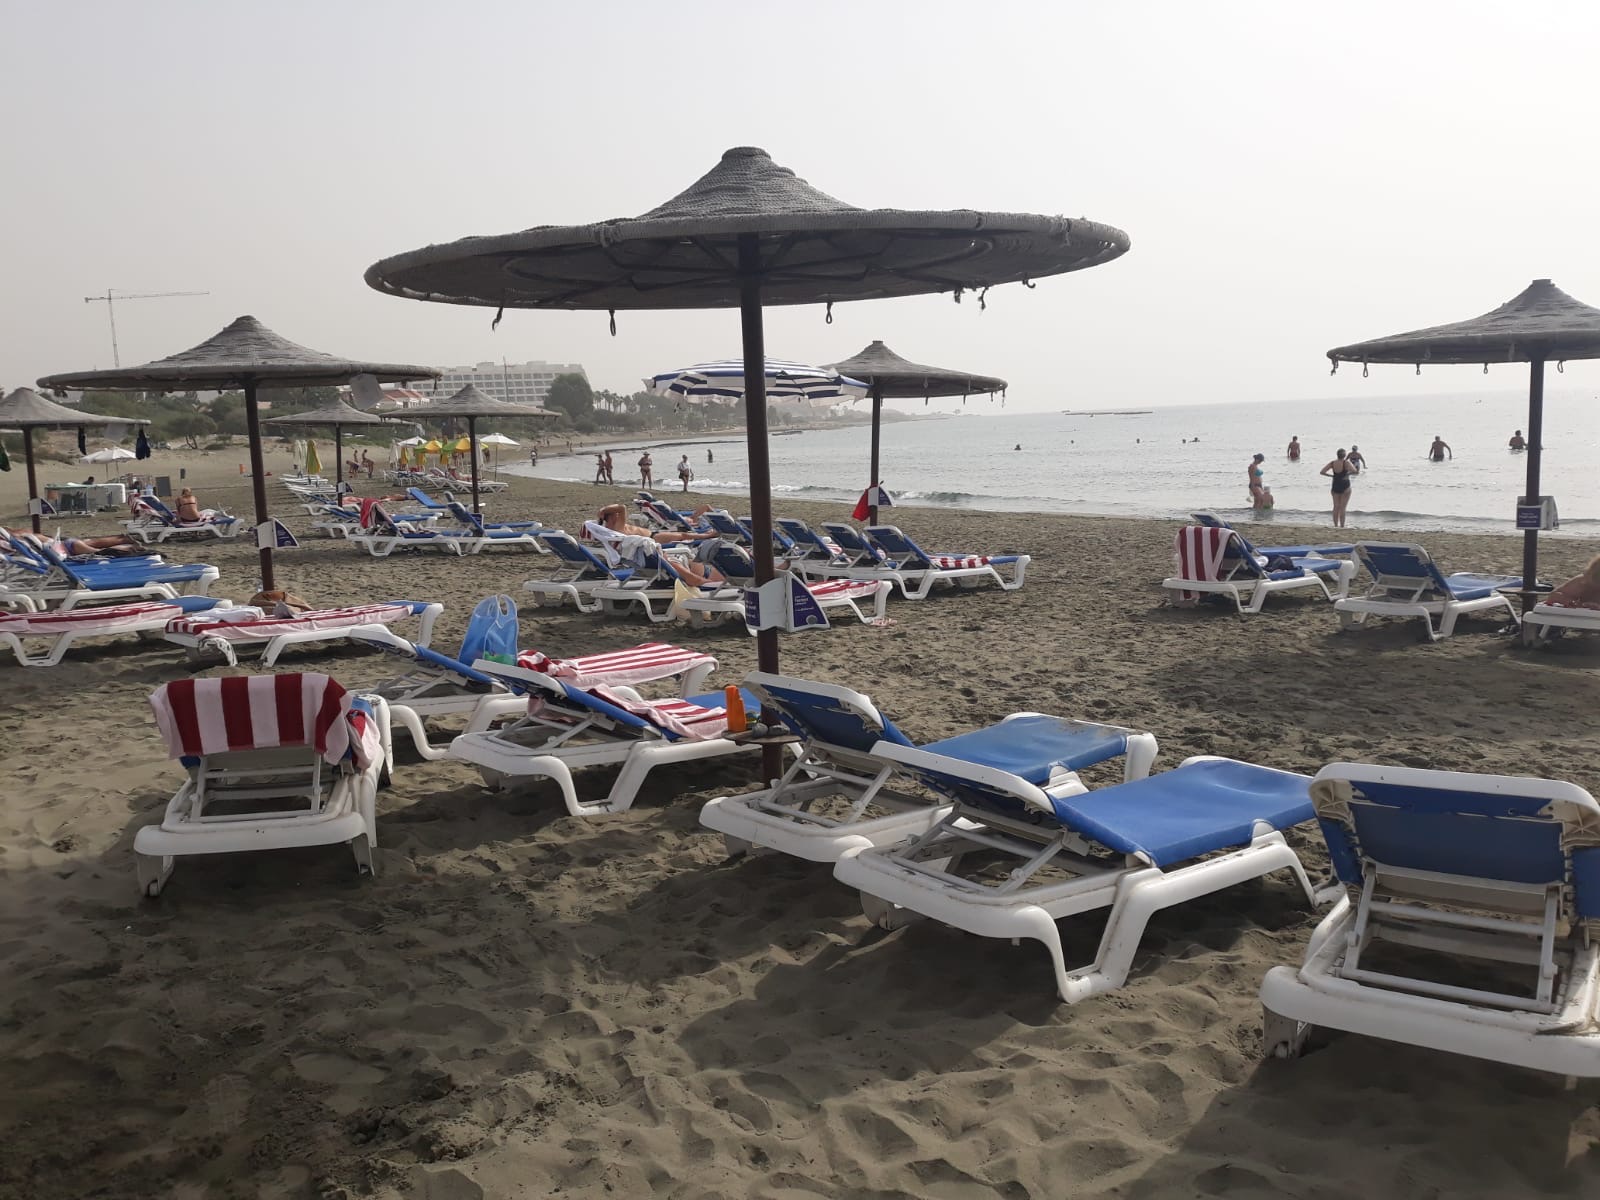 Hotelový resort St Raphael - oblast Limassol